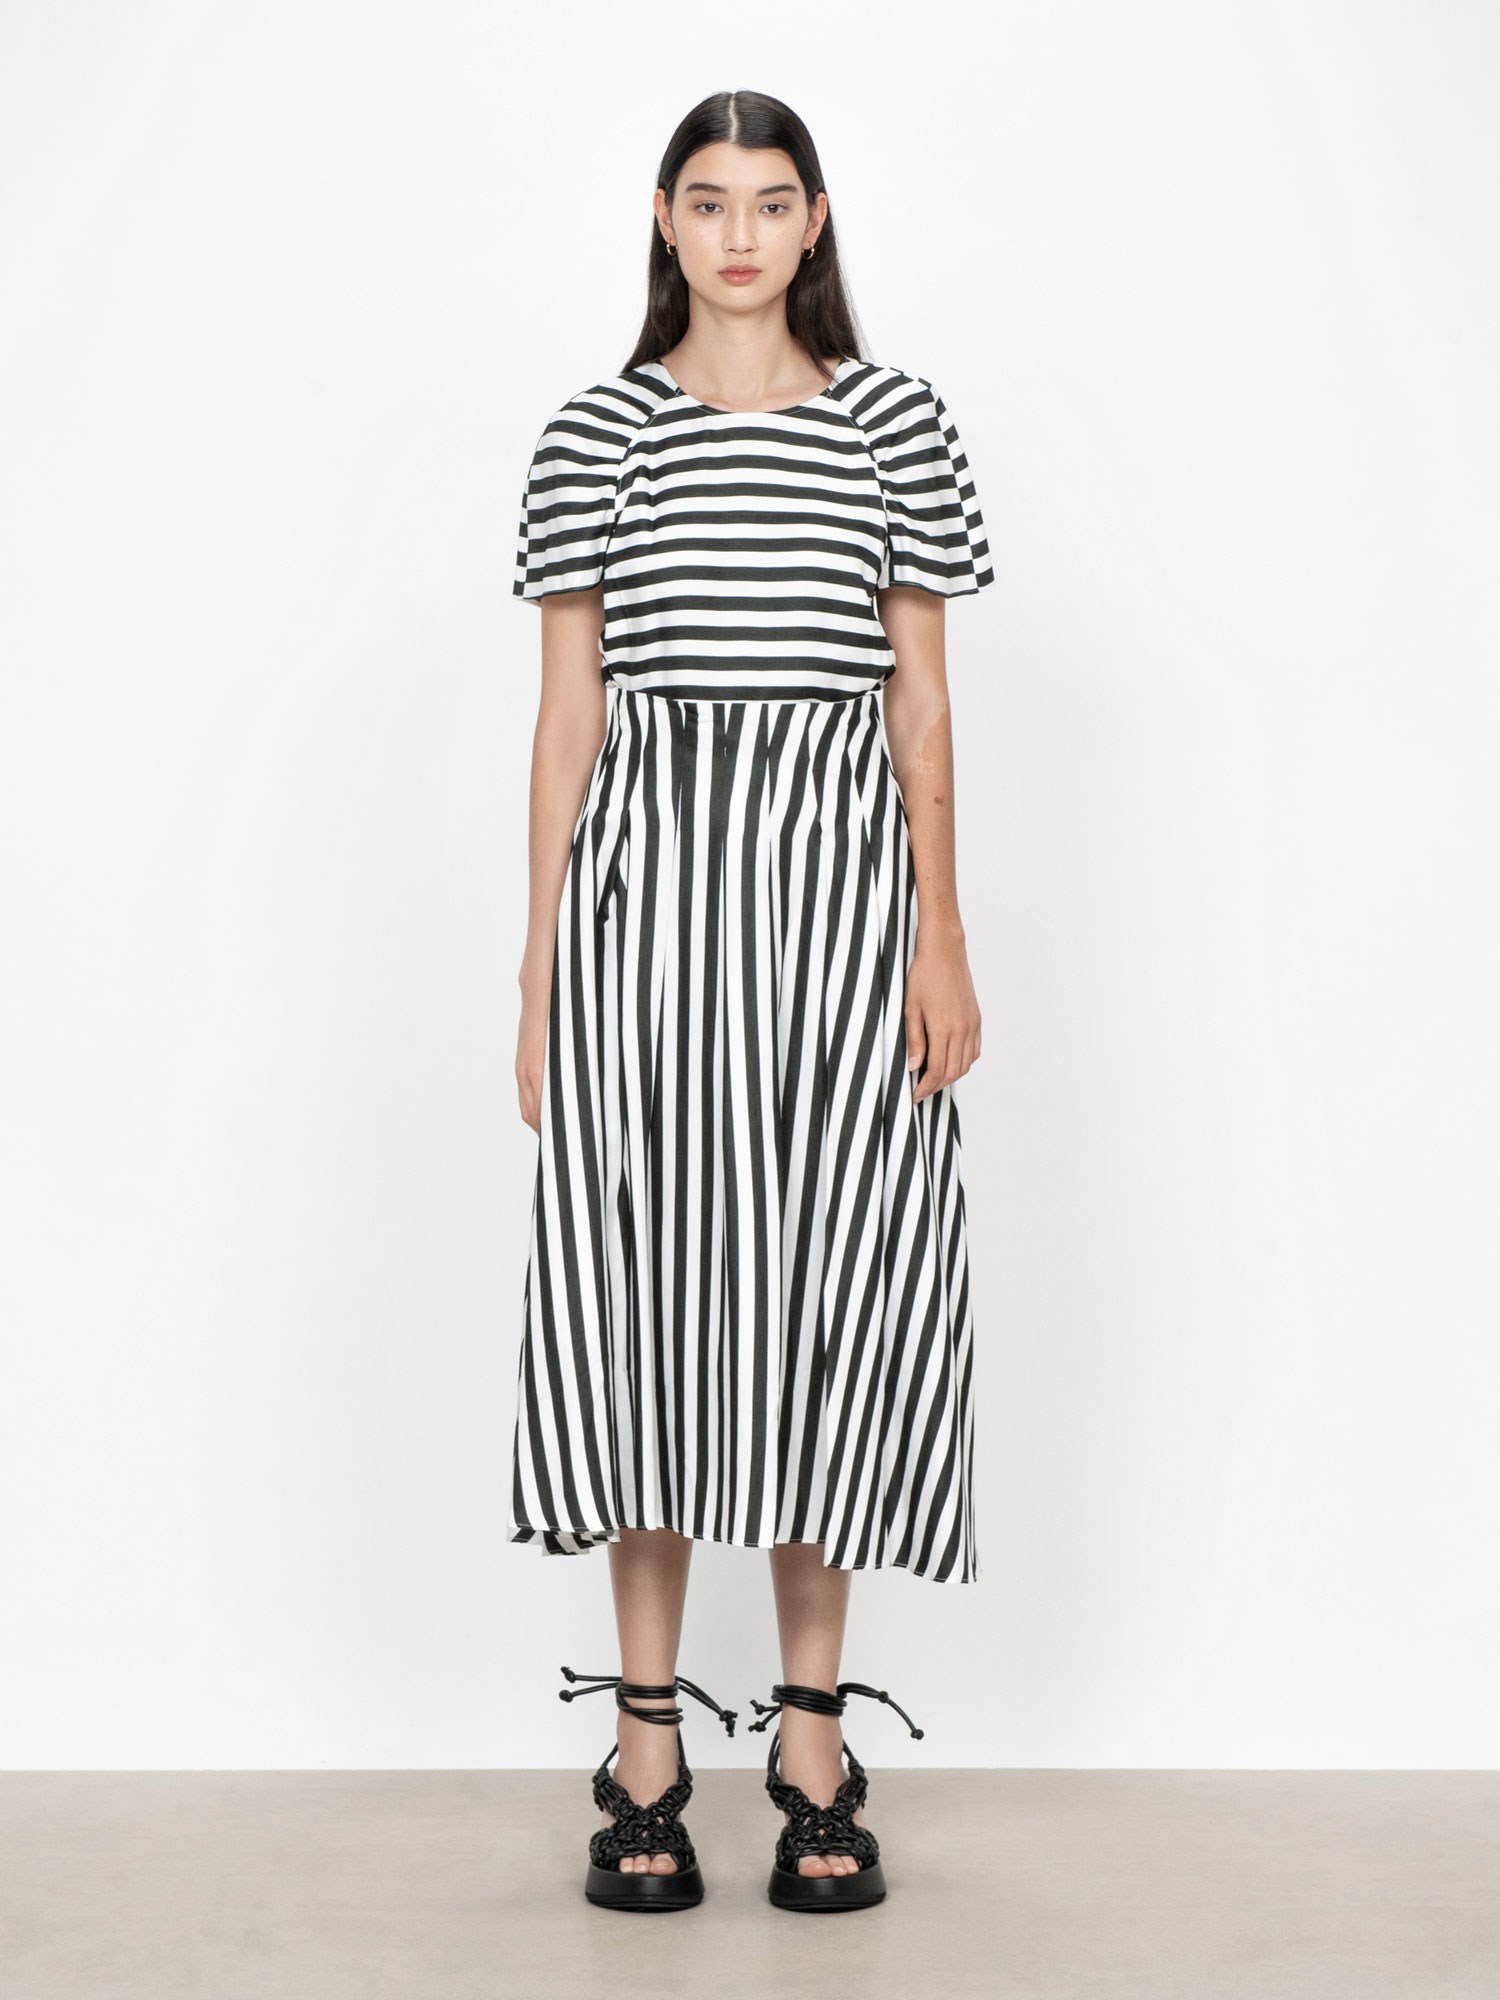 Stripe Puff Sleeve Shirt | Buy Tops Online - Veronika Maine